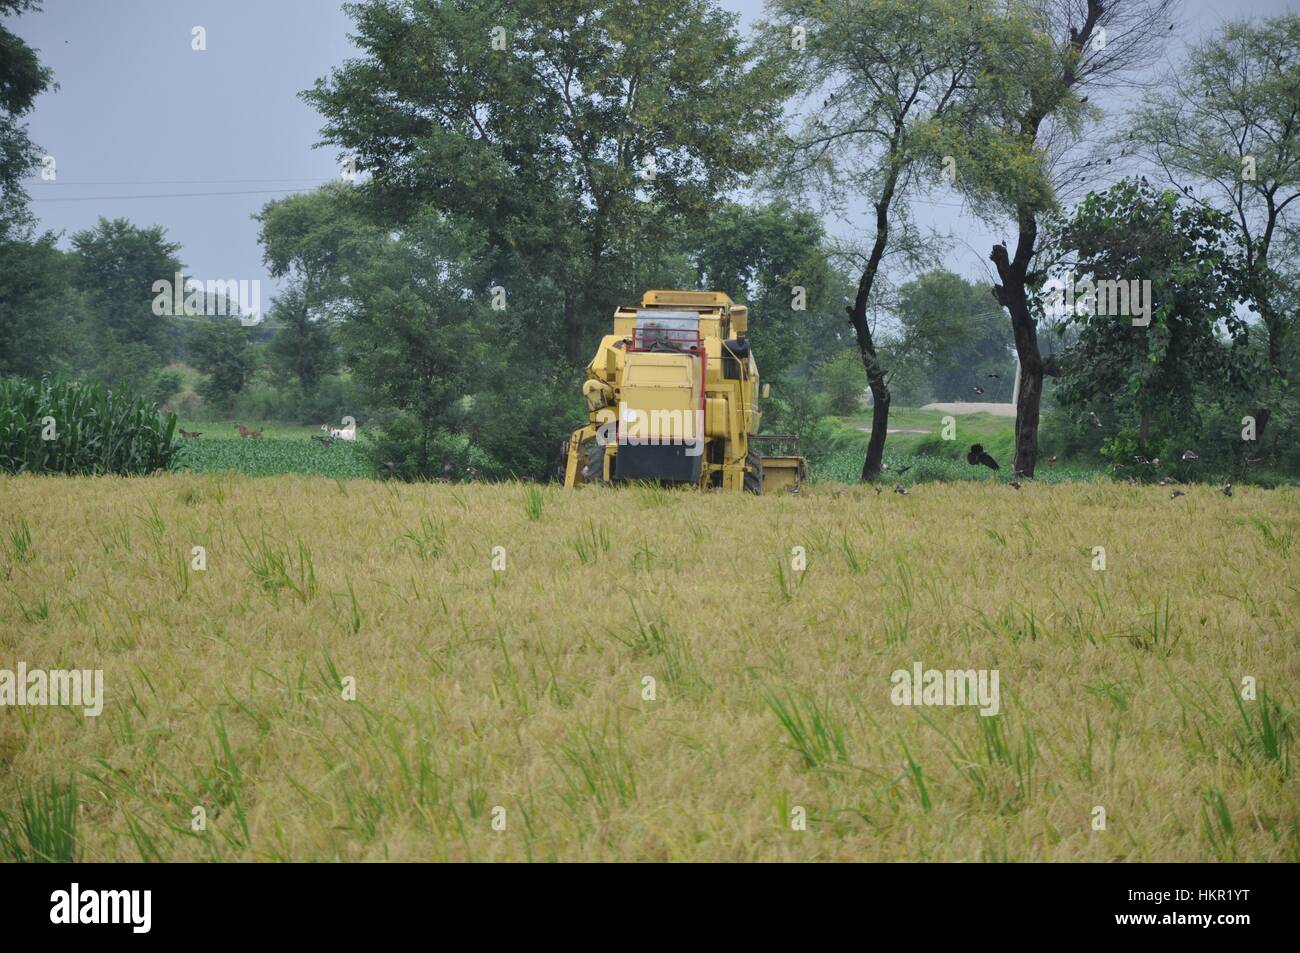 Farmer harvesting cornfield on a harvesting machine Stock Photo